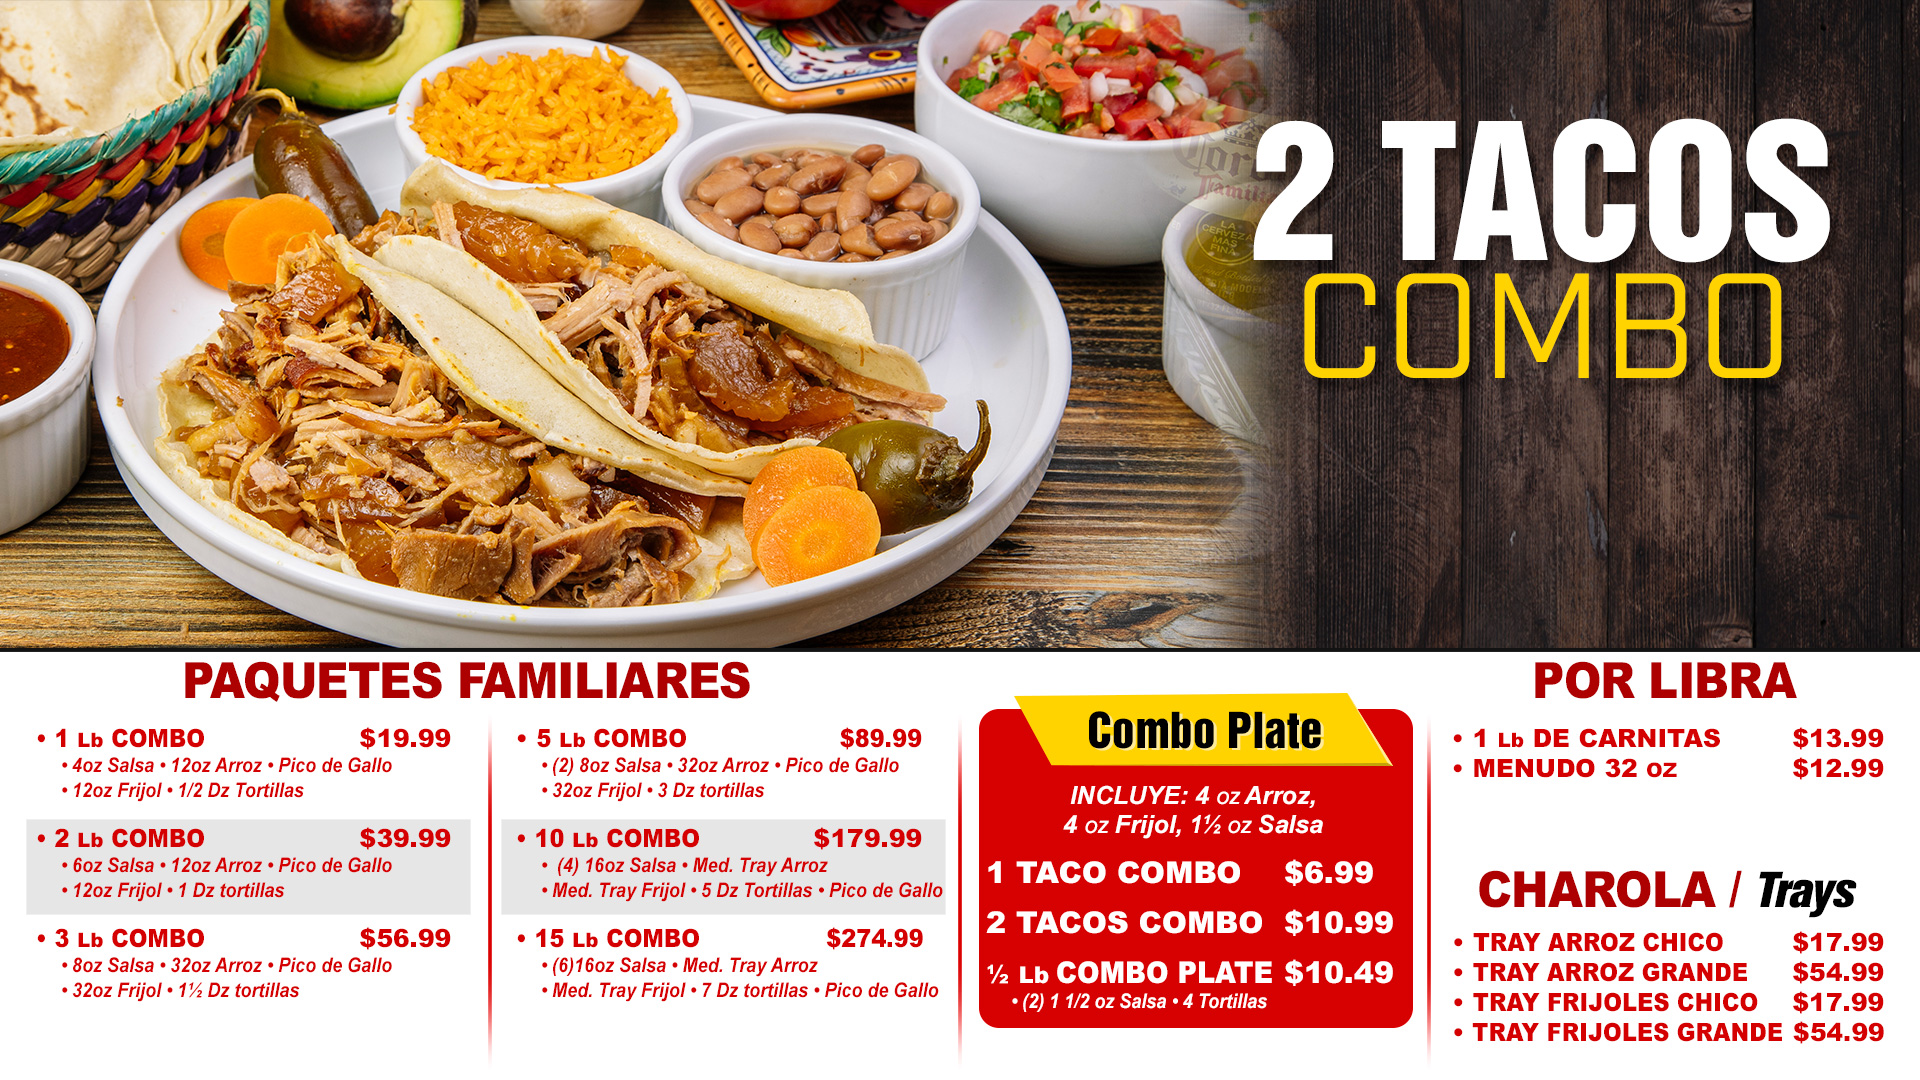 2 Tacos Combo